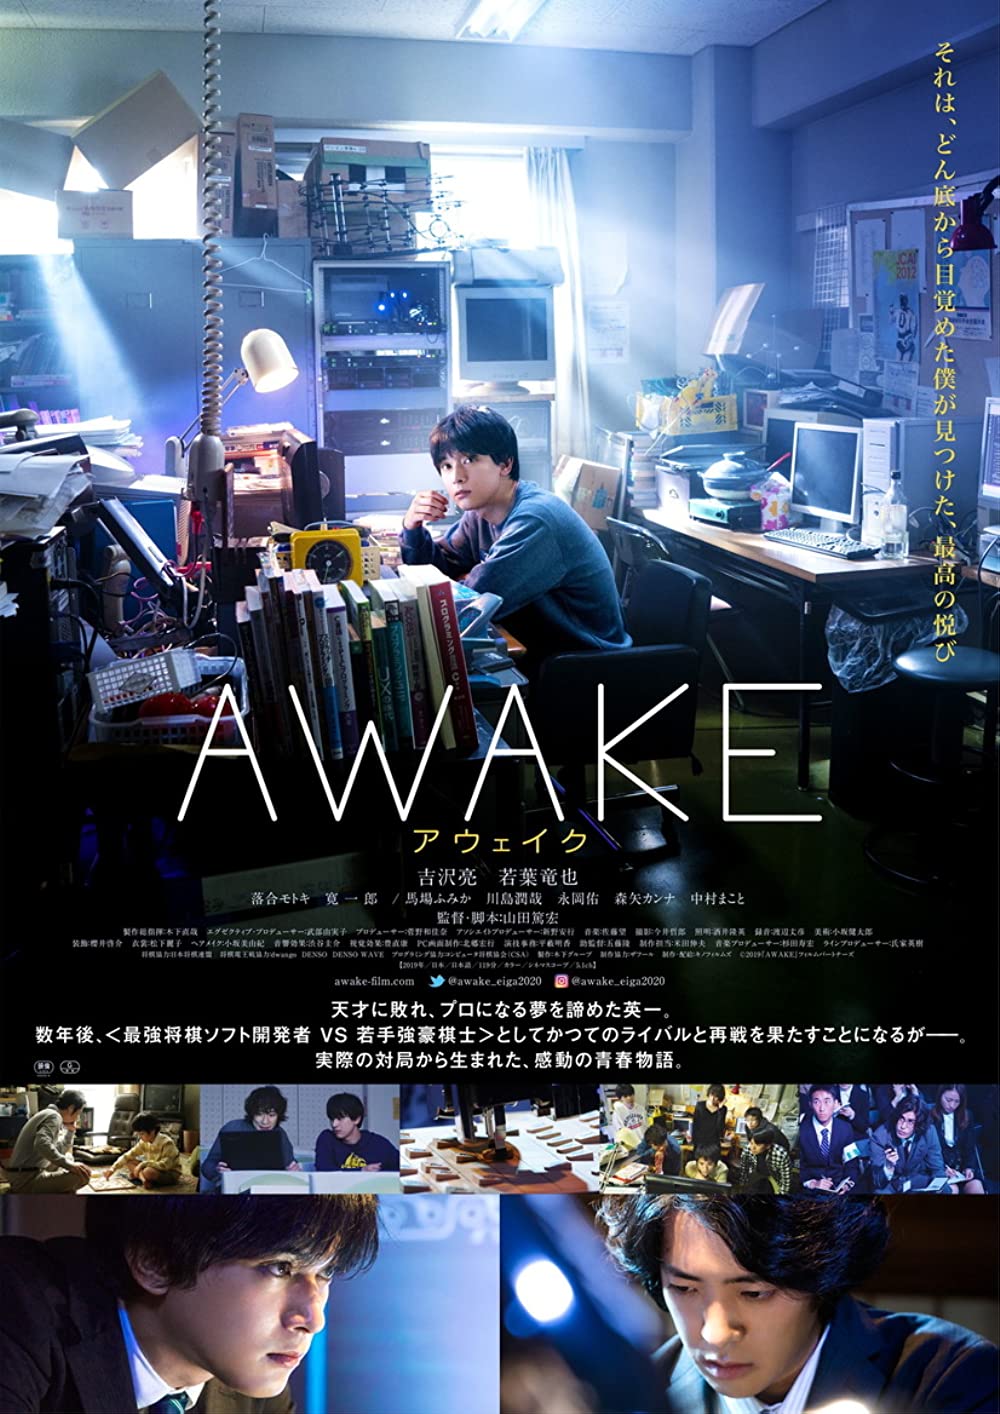 Camera Japan Festival: Awake